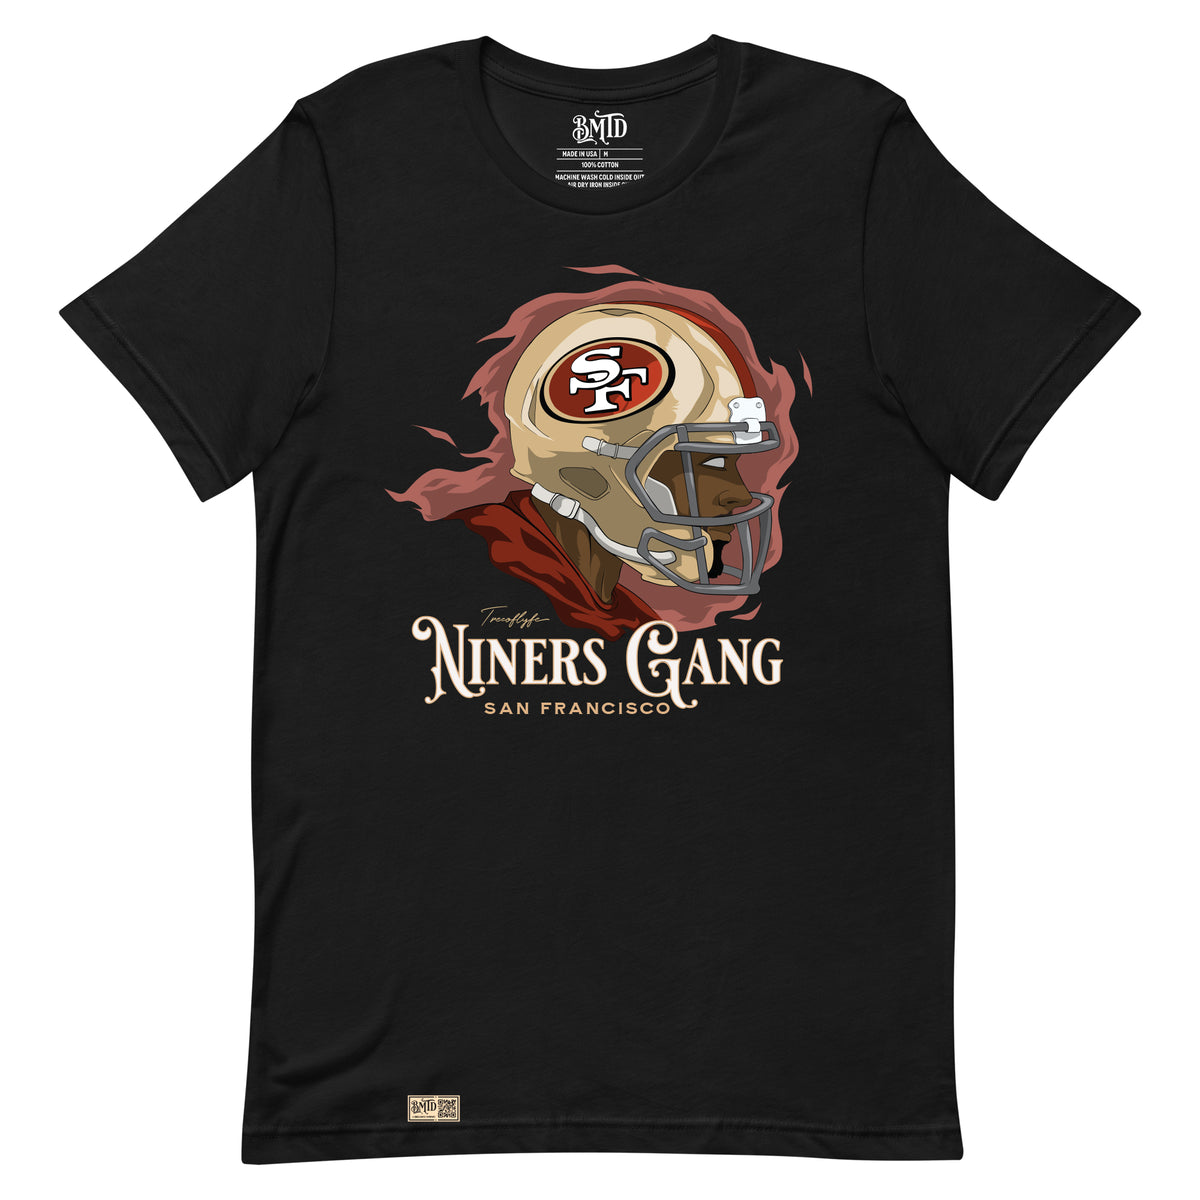 San Francisco Niners Gang Apparel Art T-shirt Exhibit 01